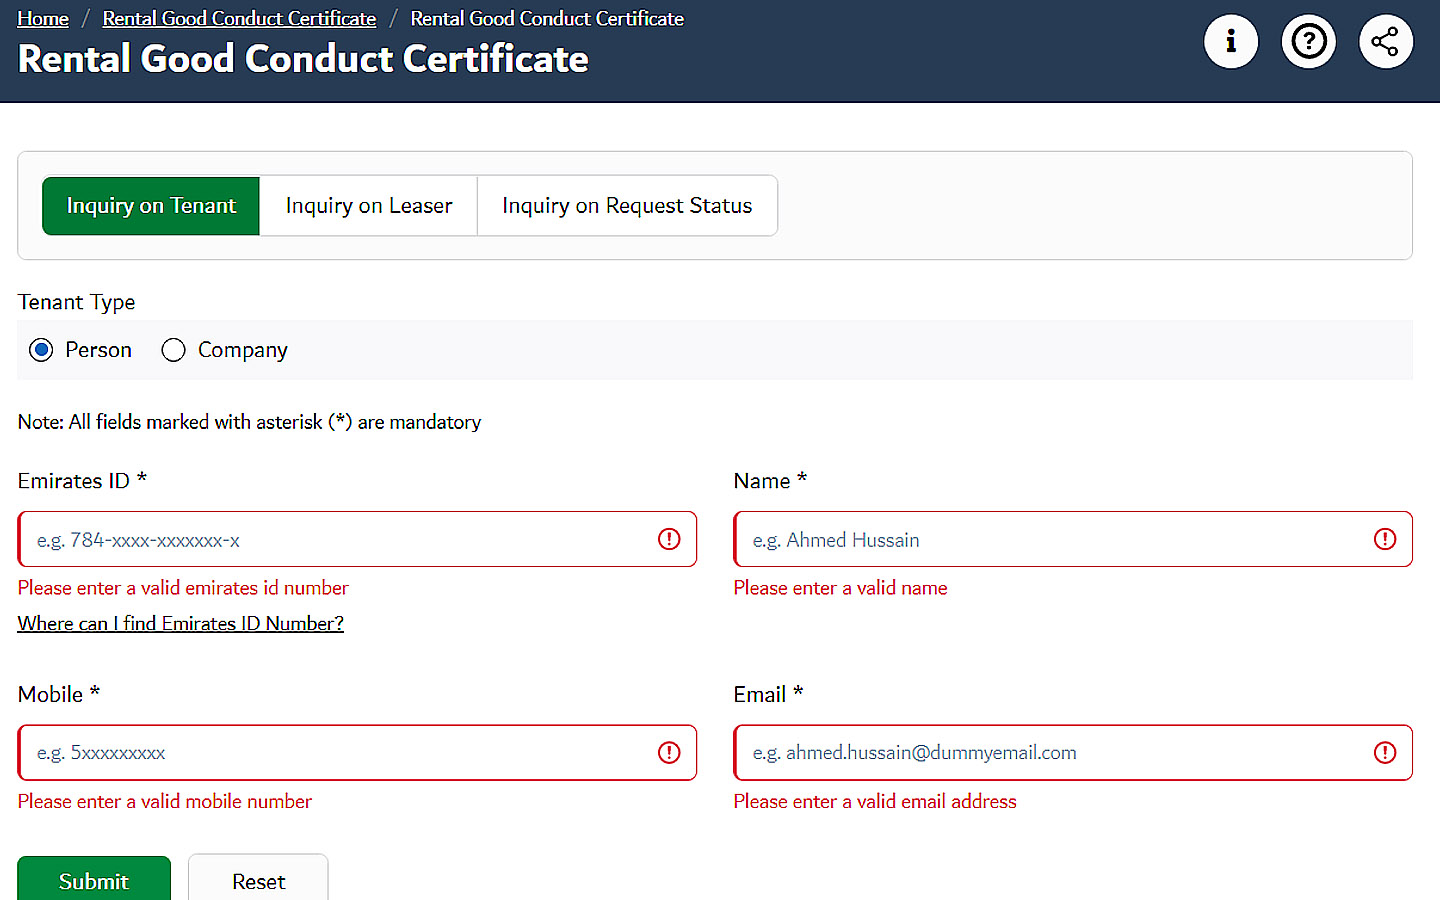 submit request for rental good conduct certificate via dubai REST app 